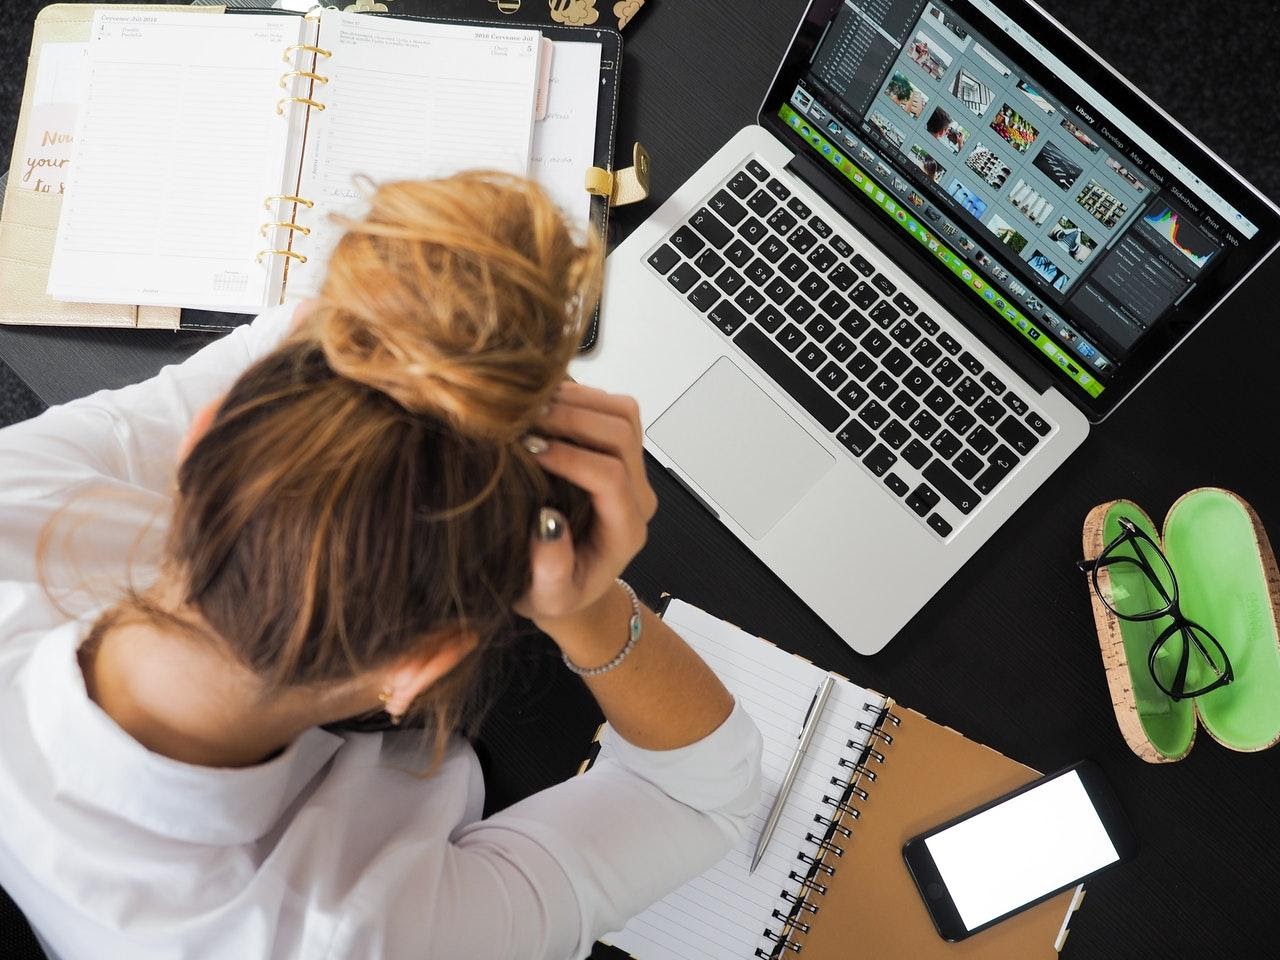 Avoiding Burnout at Work